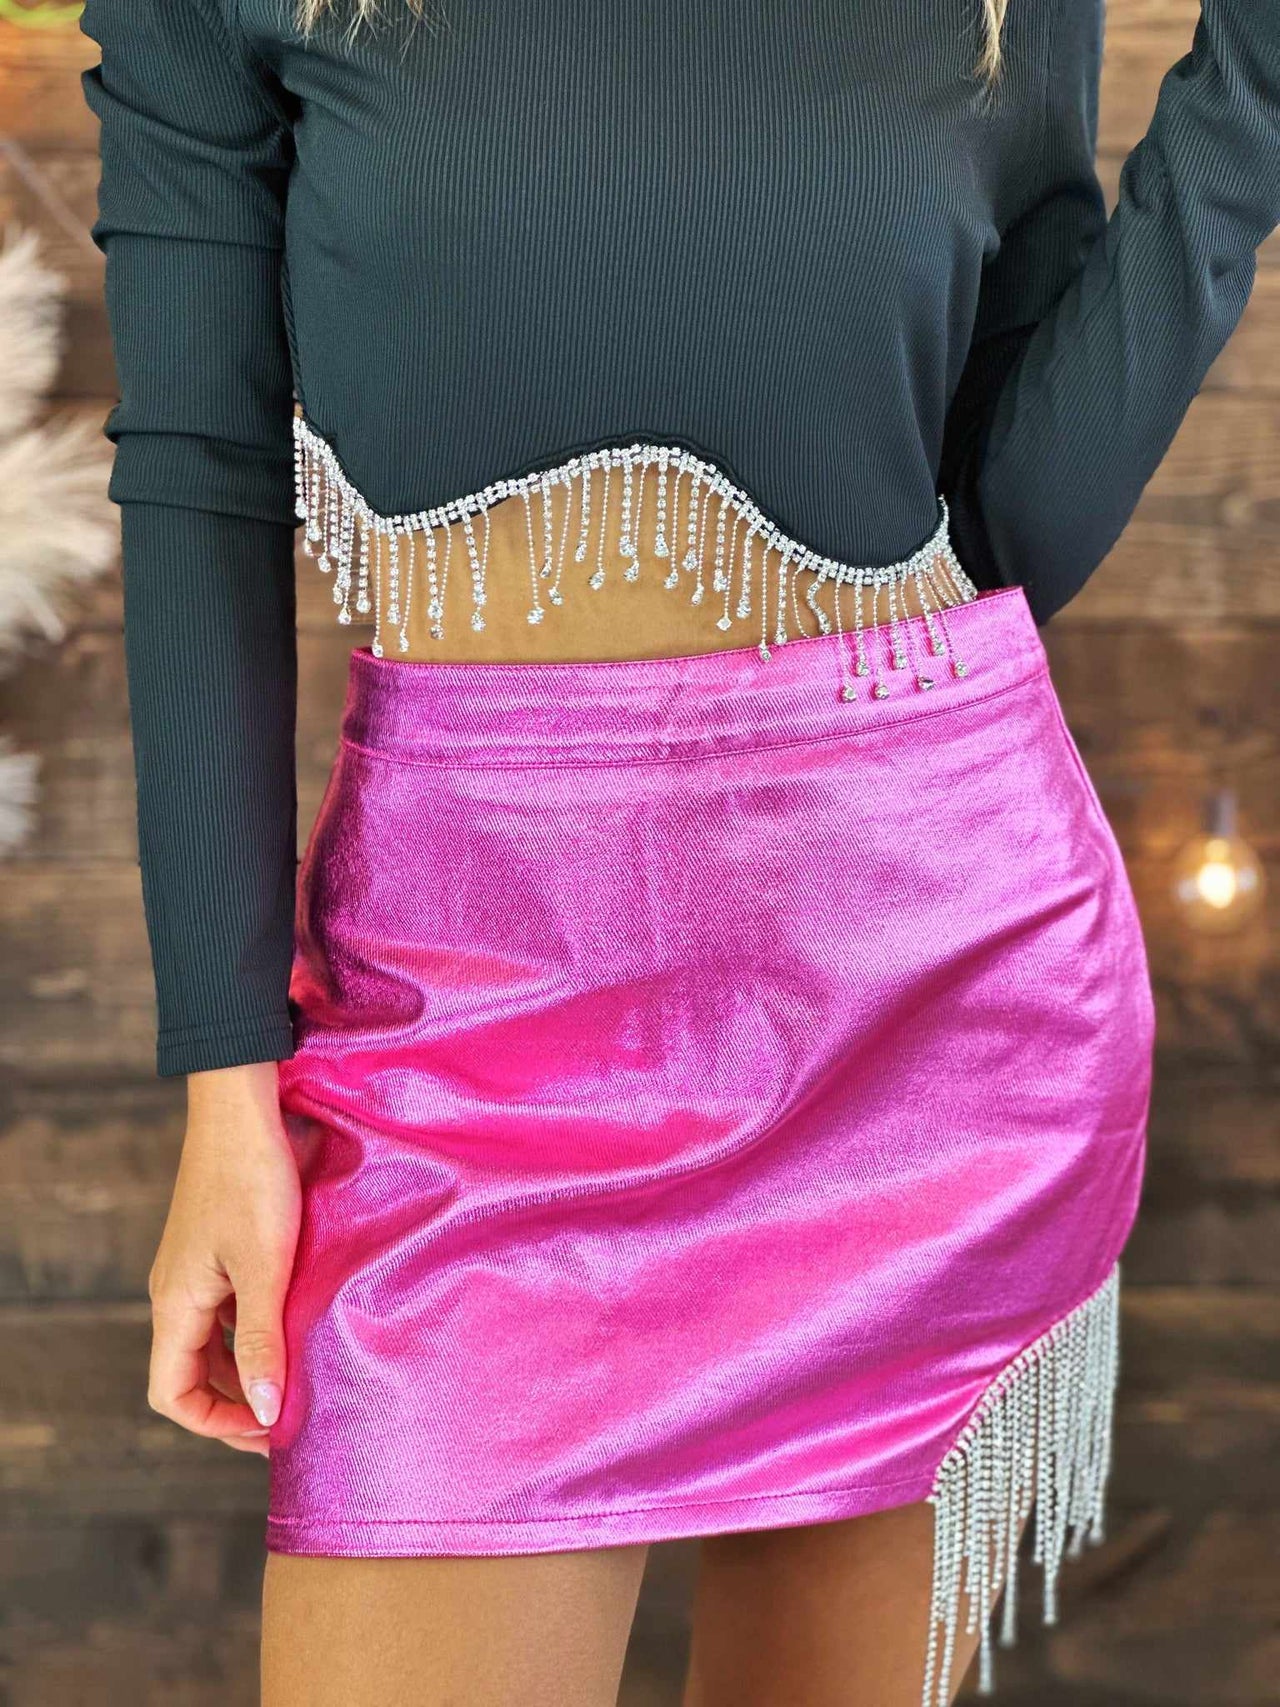 Metallic pink mini skirt with rhinestone side fringe